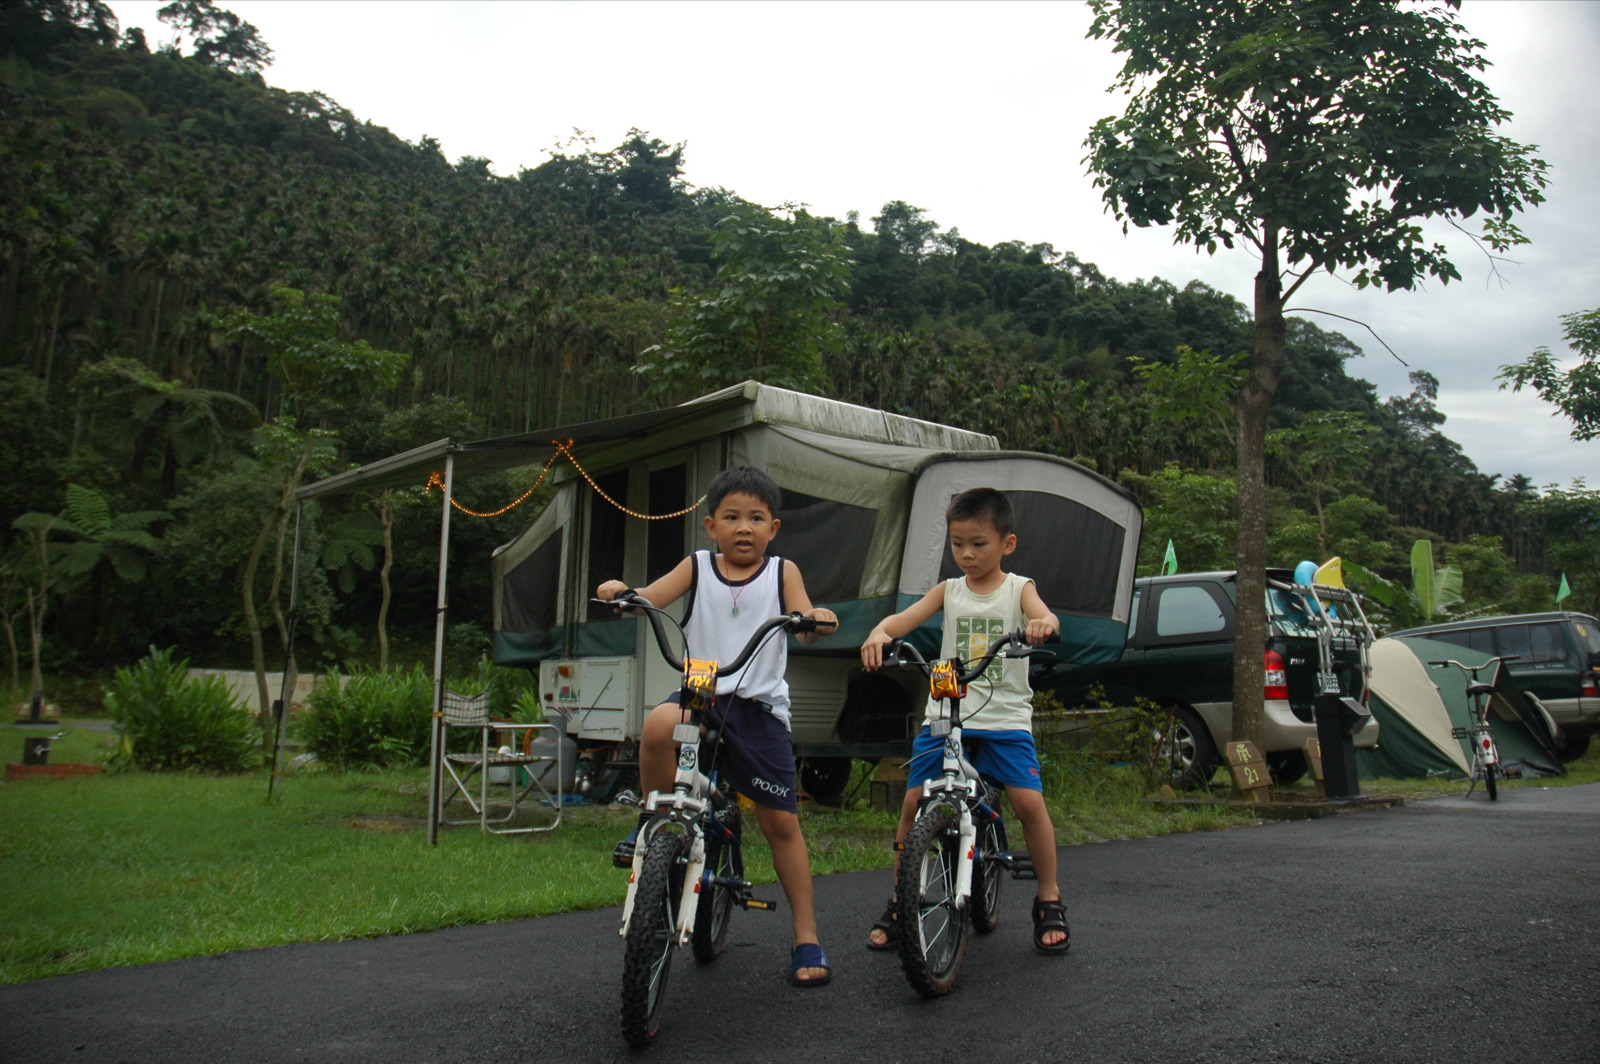 two boys riding bikes next to a mobile home